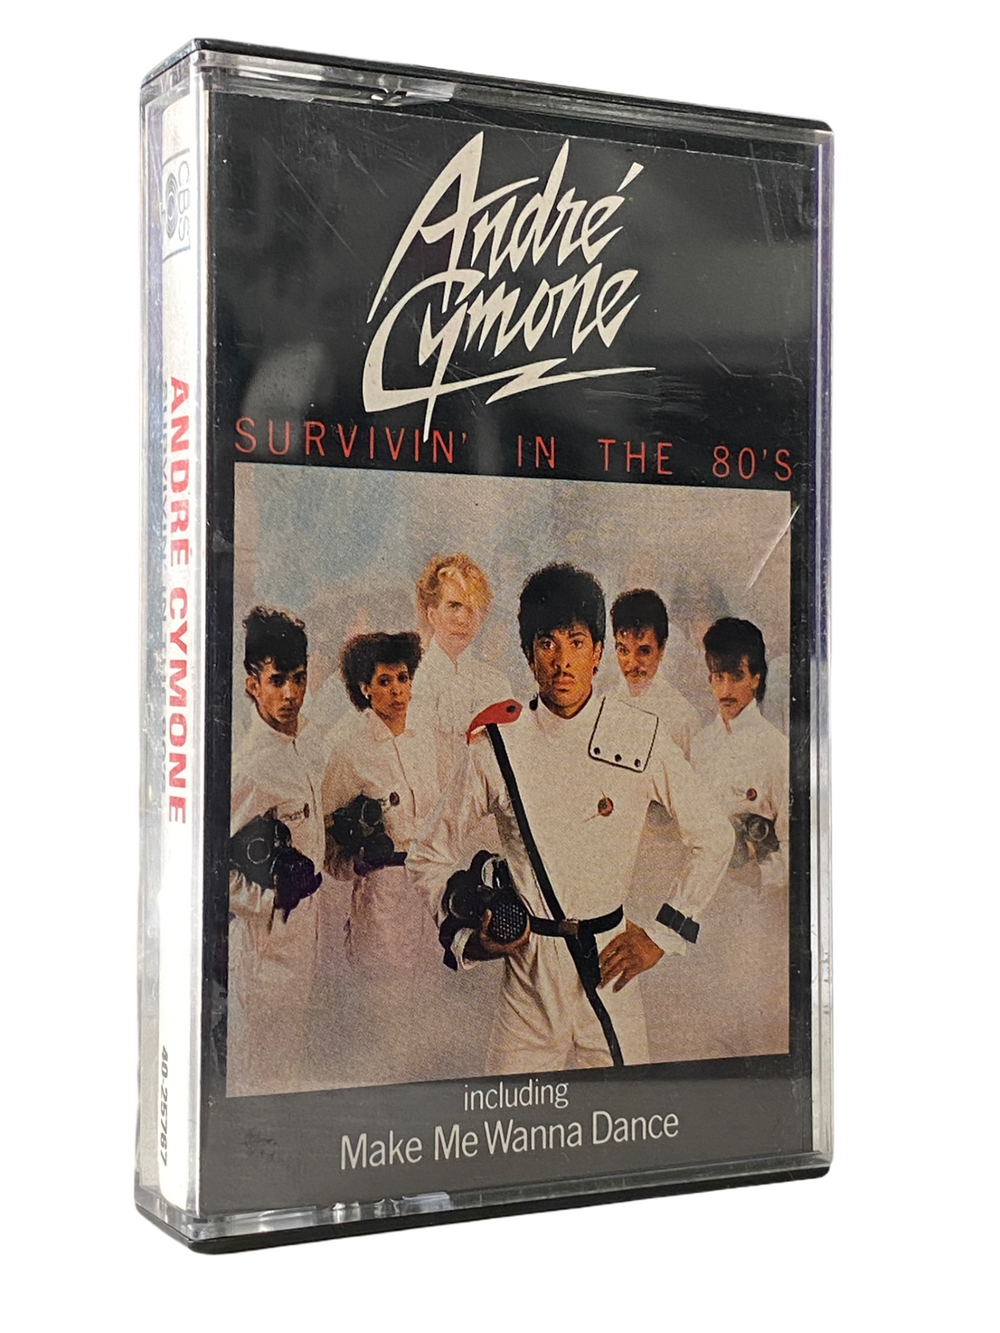 Prince – Andre Cymone Survivin'  Original Cassette Tape 1983 UK Release Prince